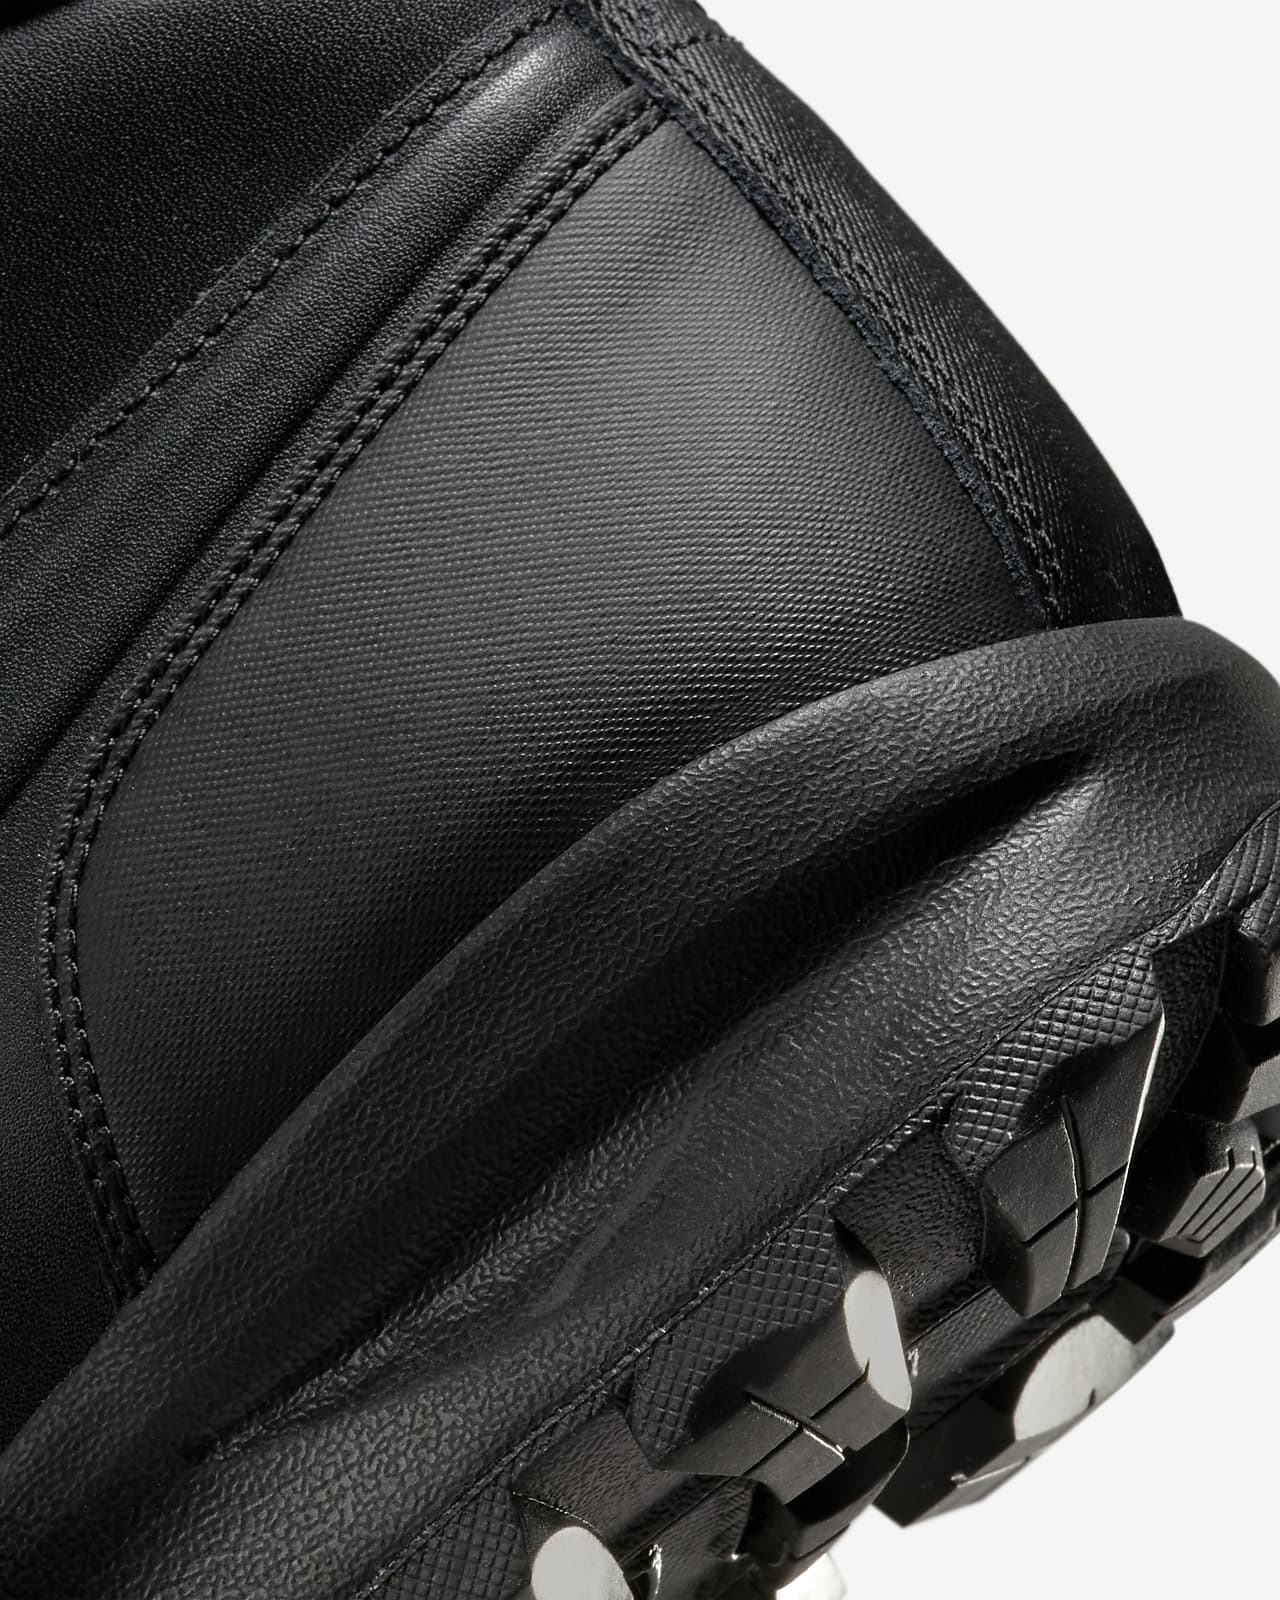 SE Nike Manoa Men\'s Leather Boots.